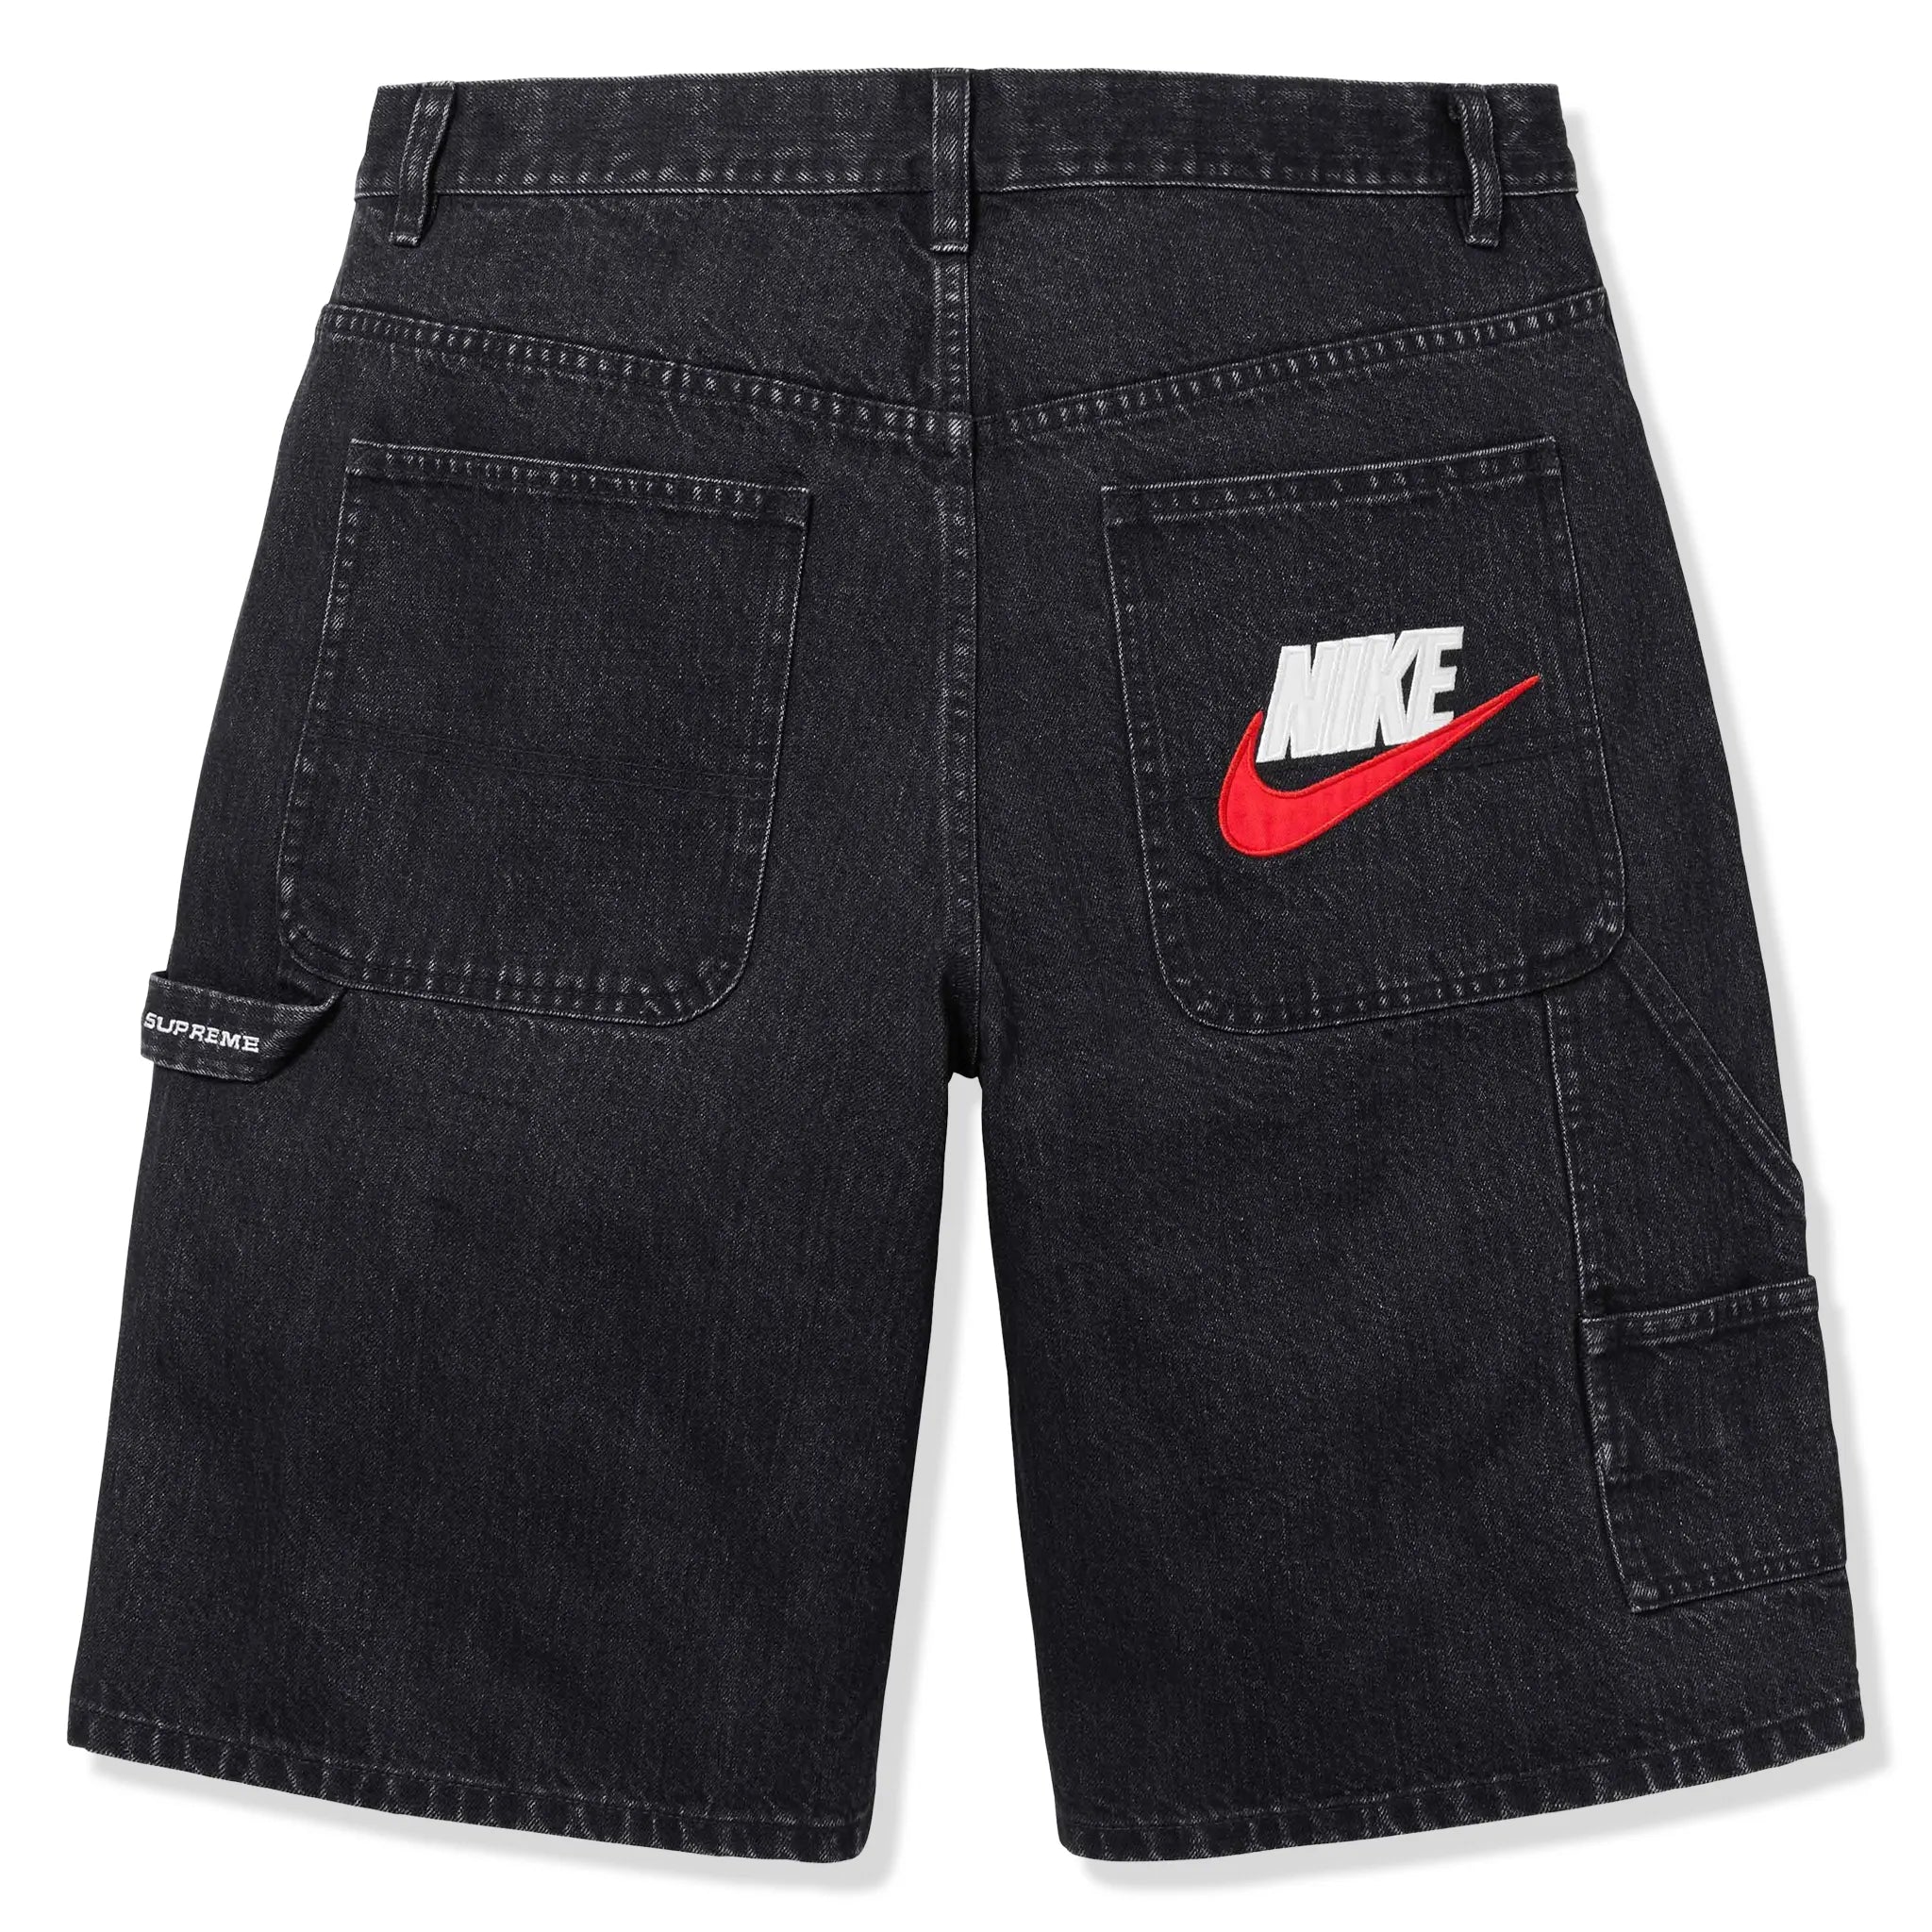 Back view of Nike Supreme Denim Black Shorts